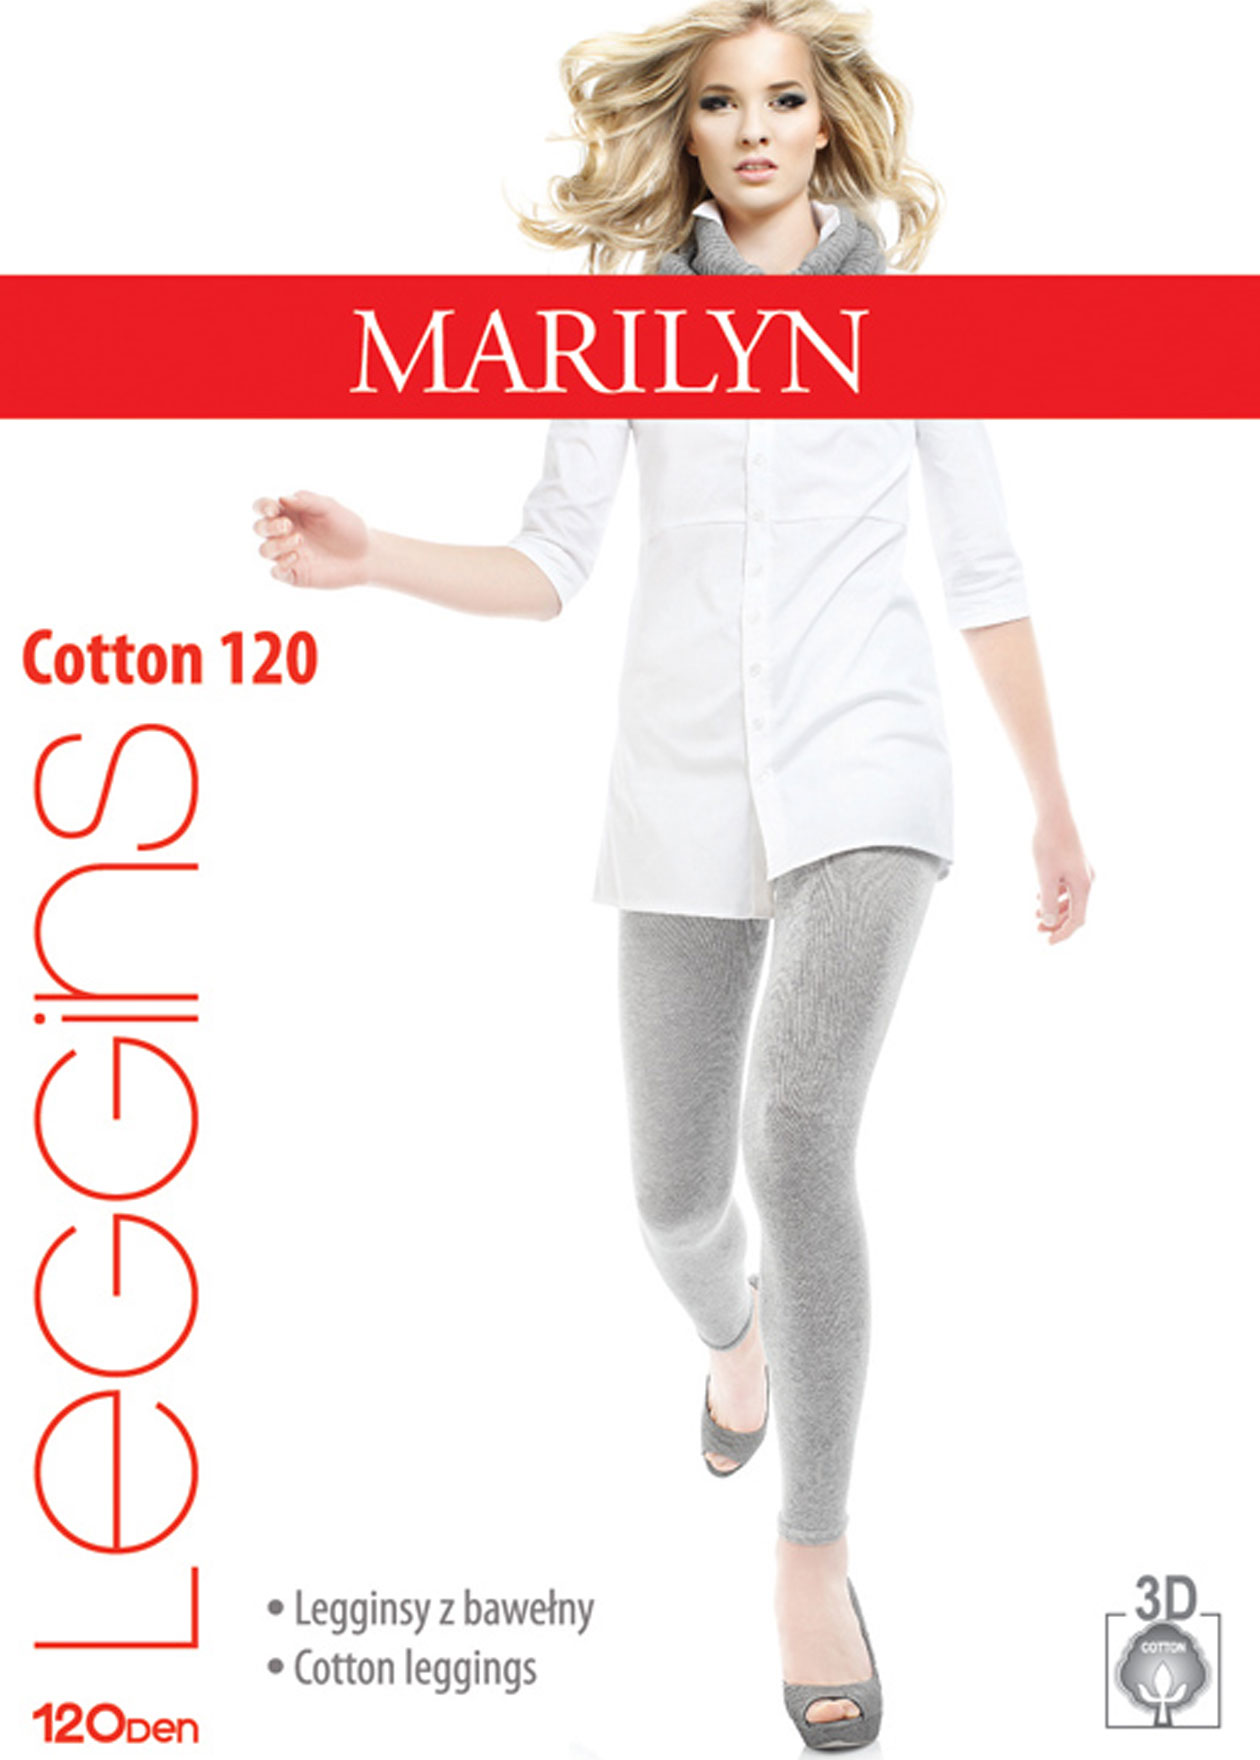 Marilyn Cotton 120